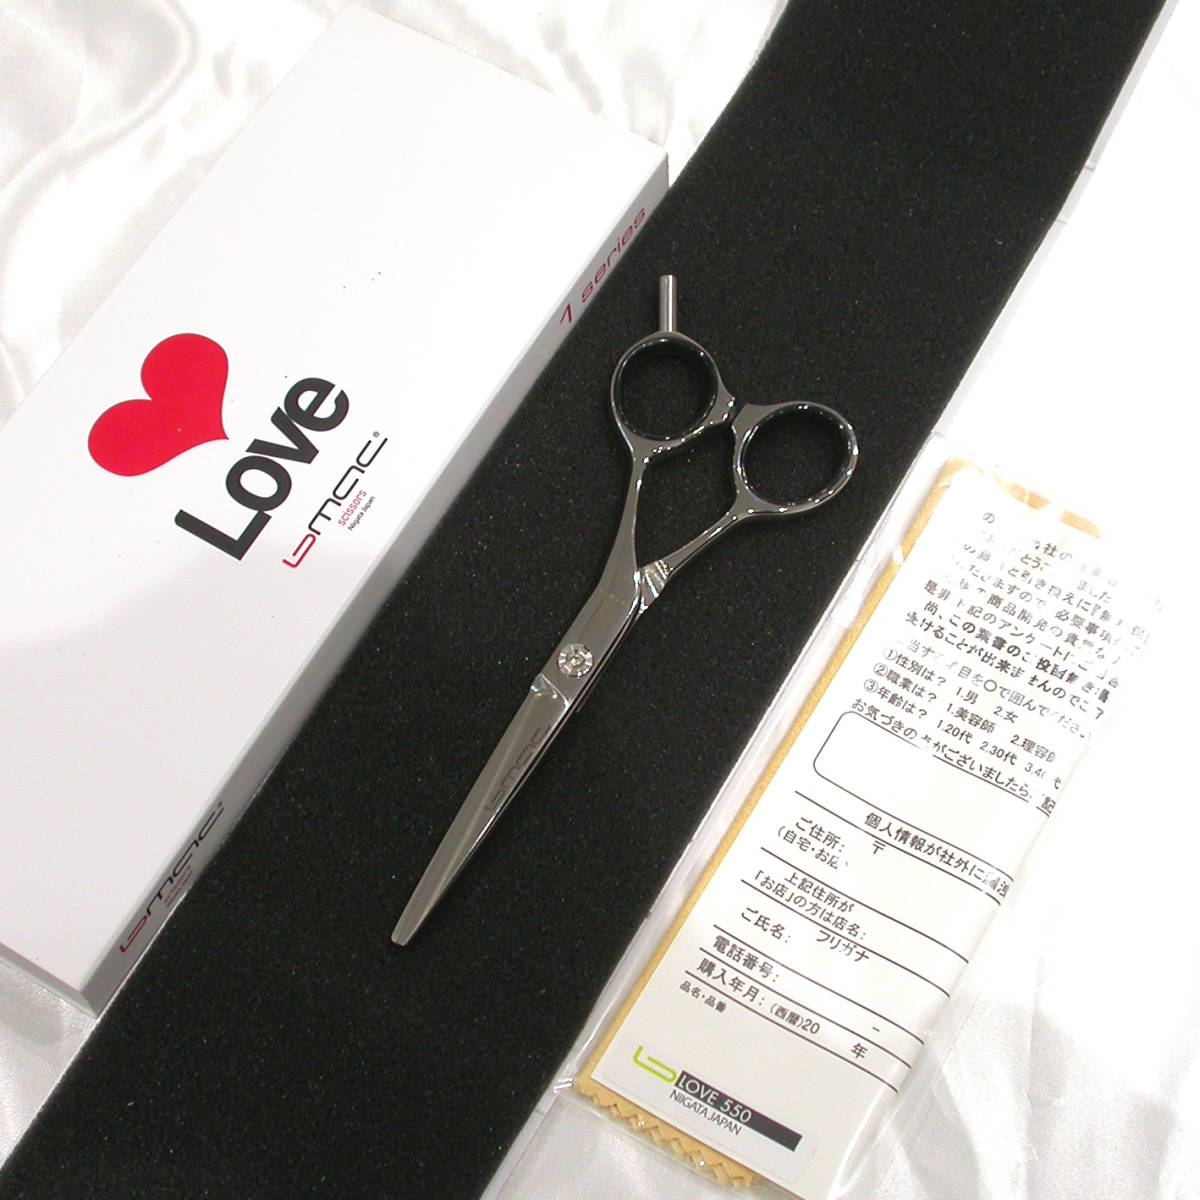 Mbmac scissors ビー マック 1series 1シリーズ LOVE OFF